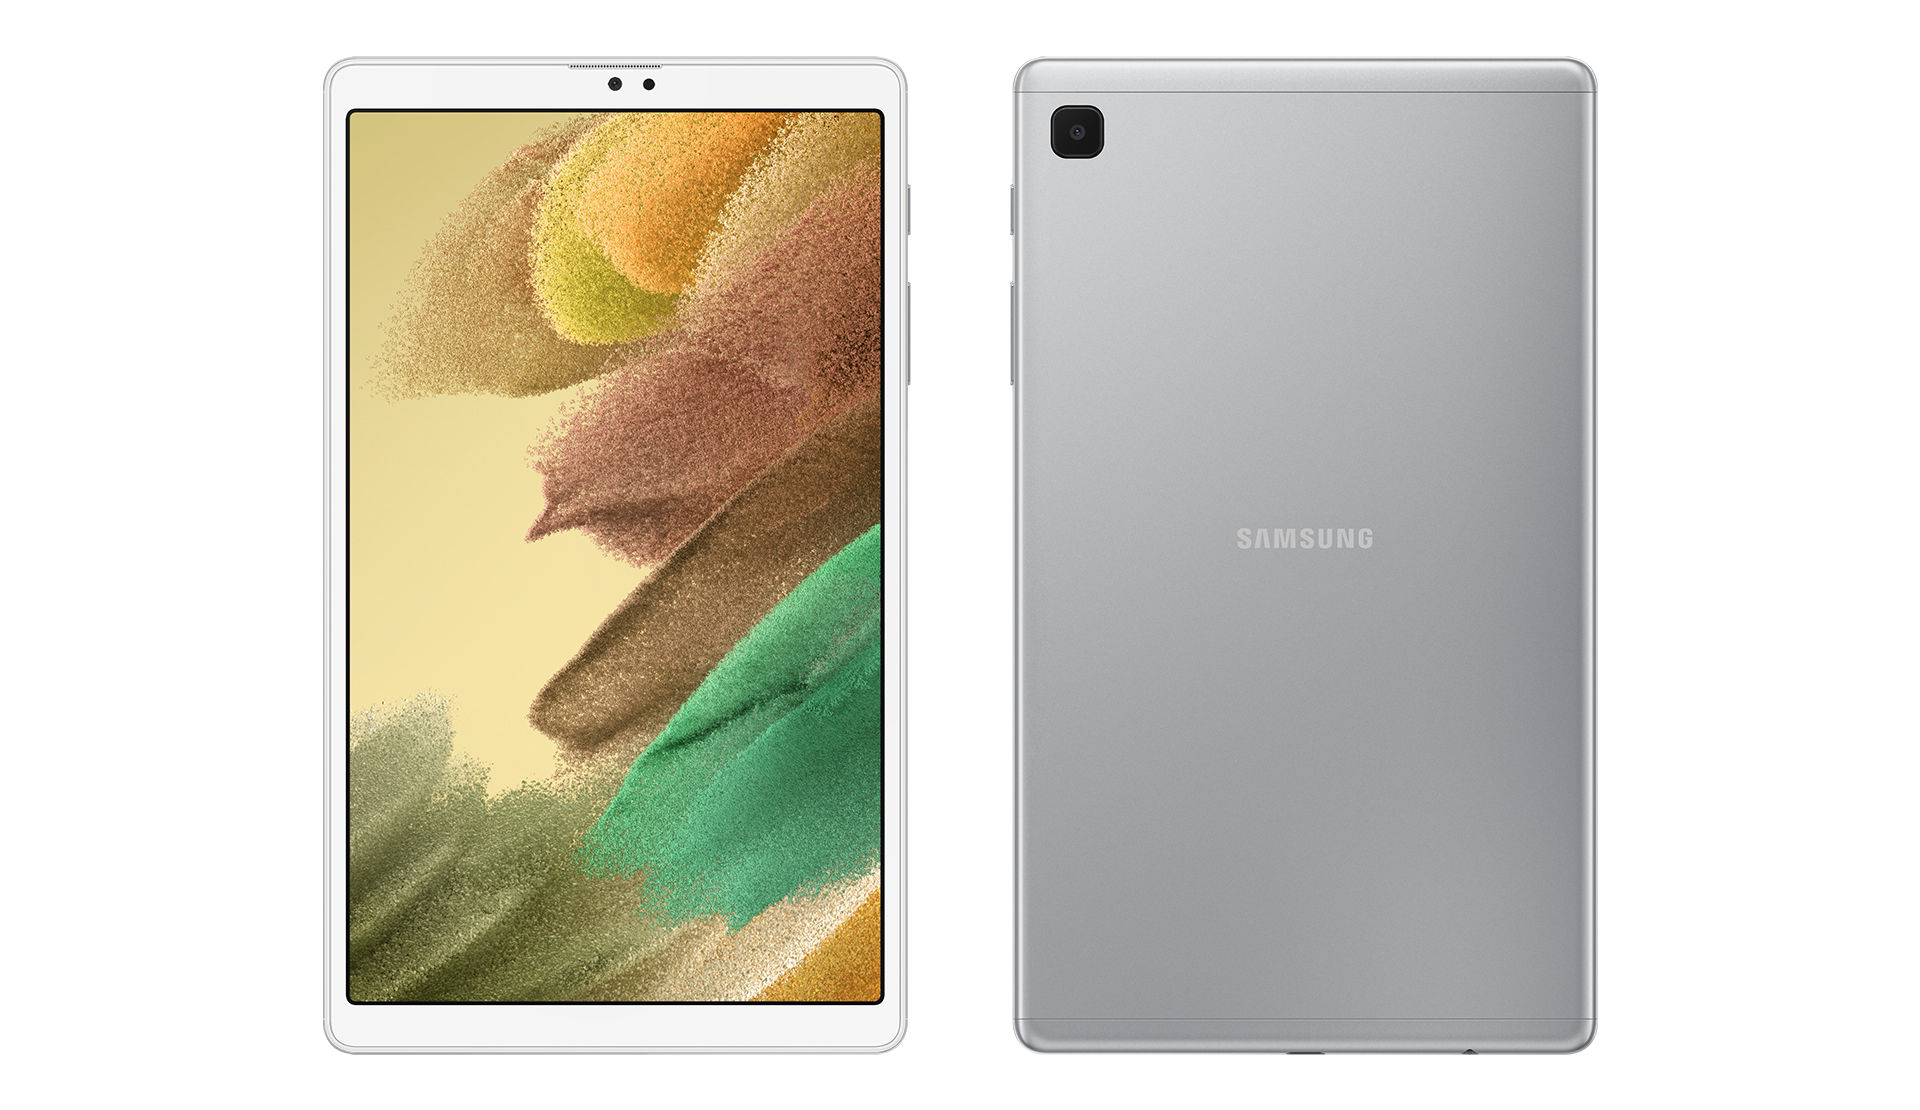 Samsung Galaxy Tab S7 FE, Tab A7 Lite Announced: Specifications